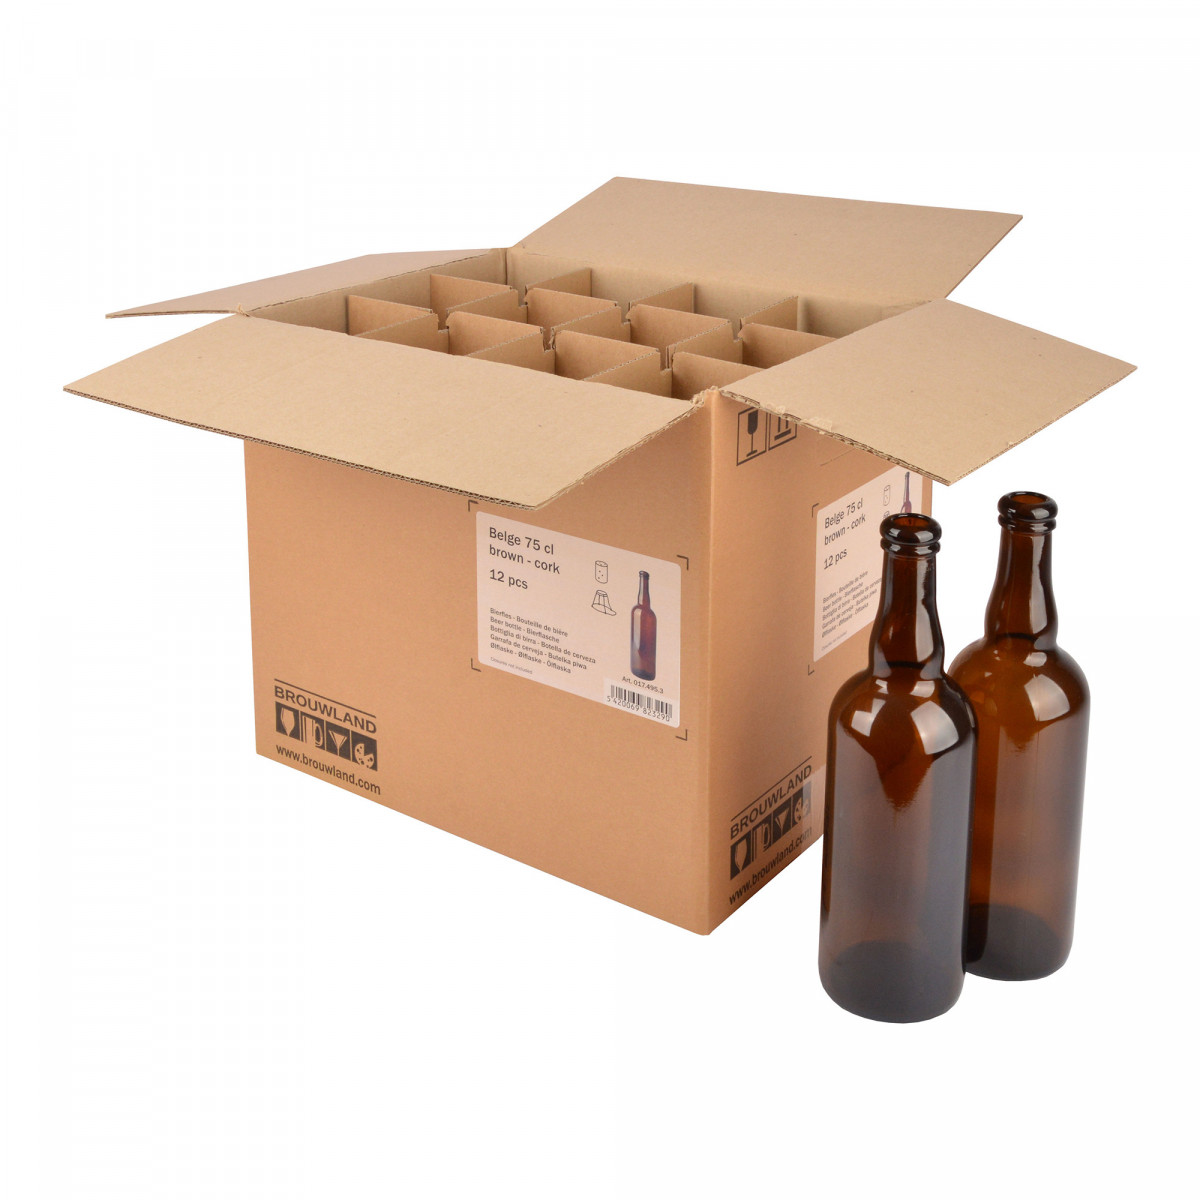 Beer bottle Belge 75 cl, brown, cork, box 12 pcs